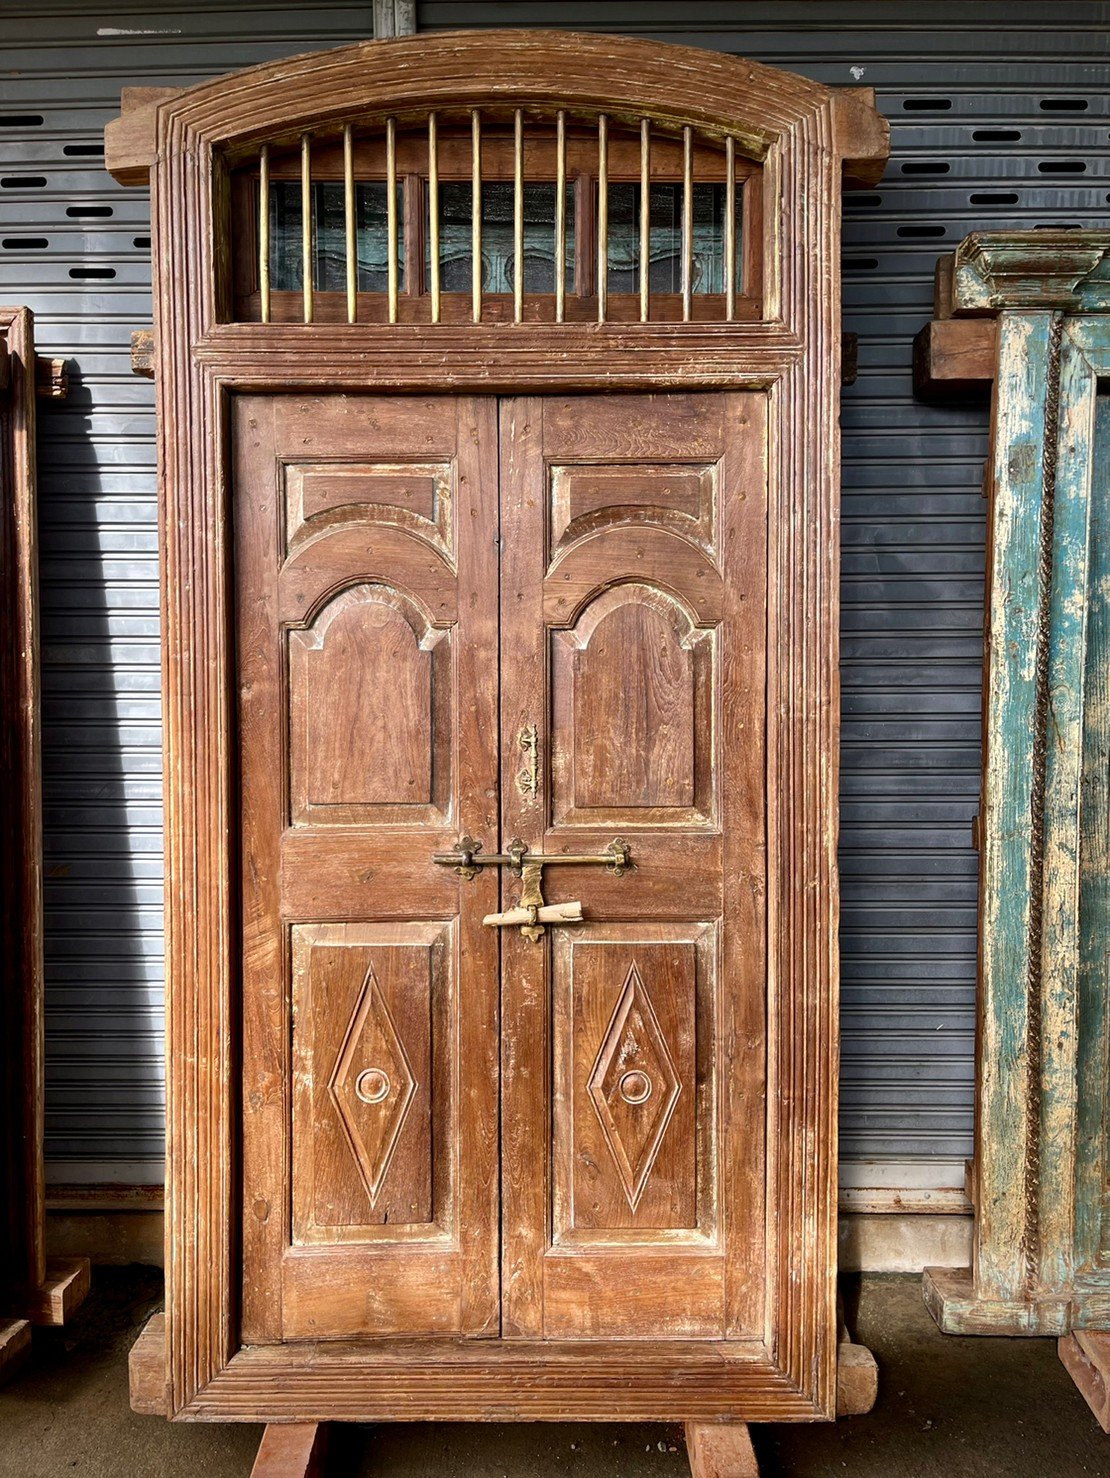 XL108 Classic European Door with Carving